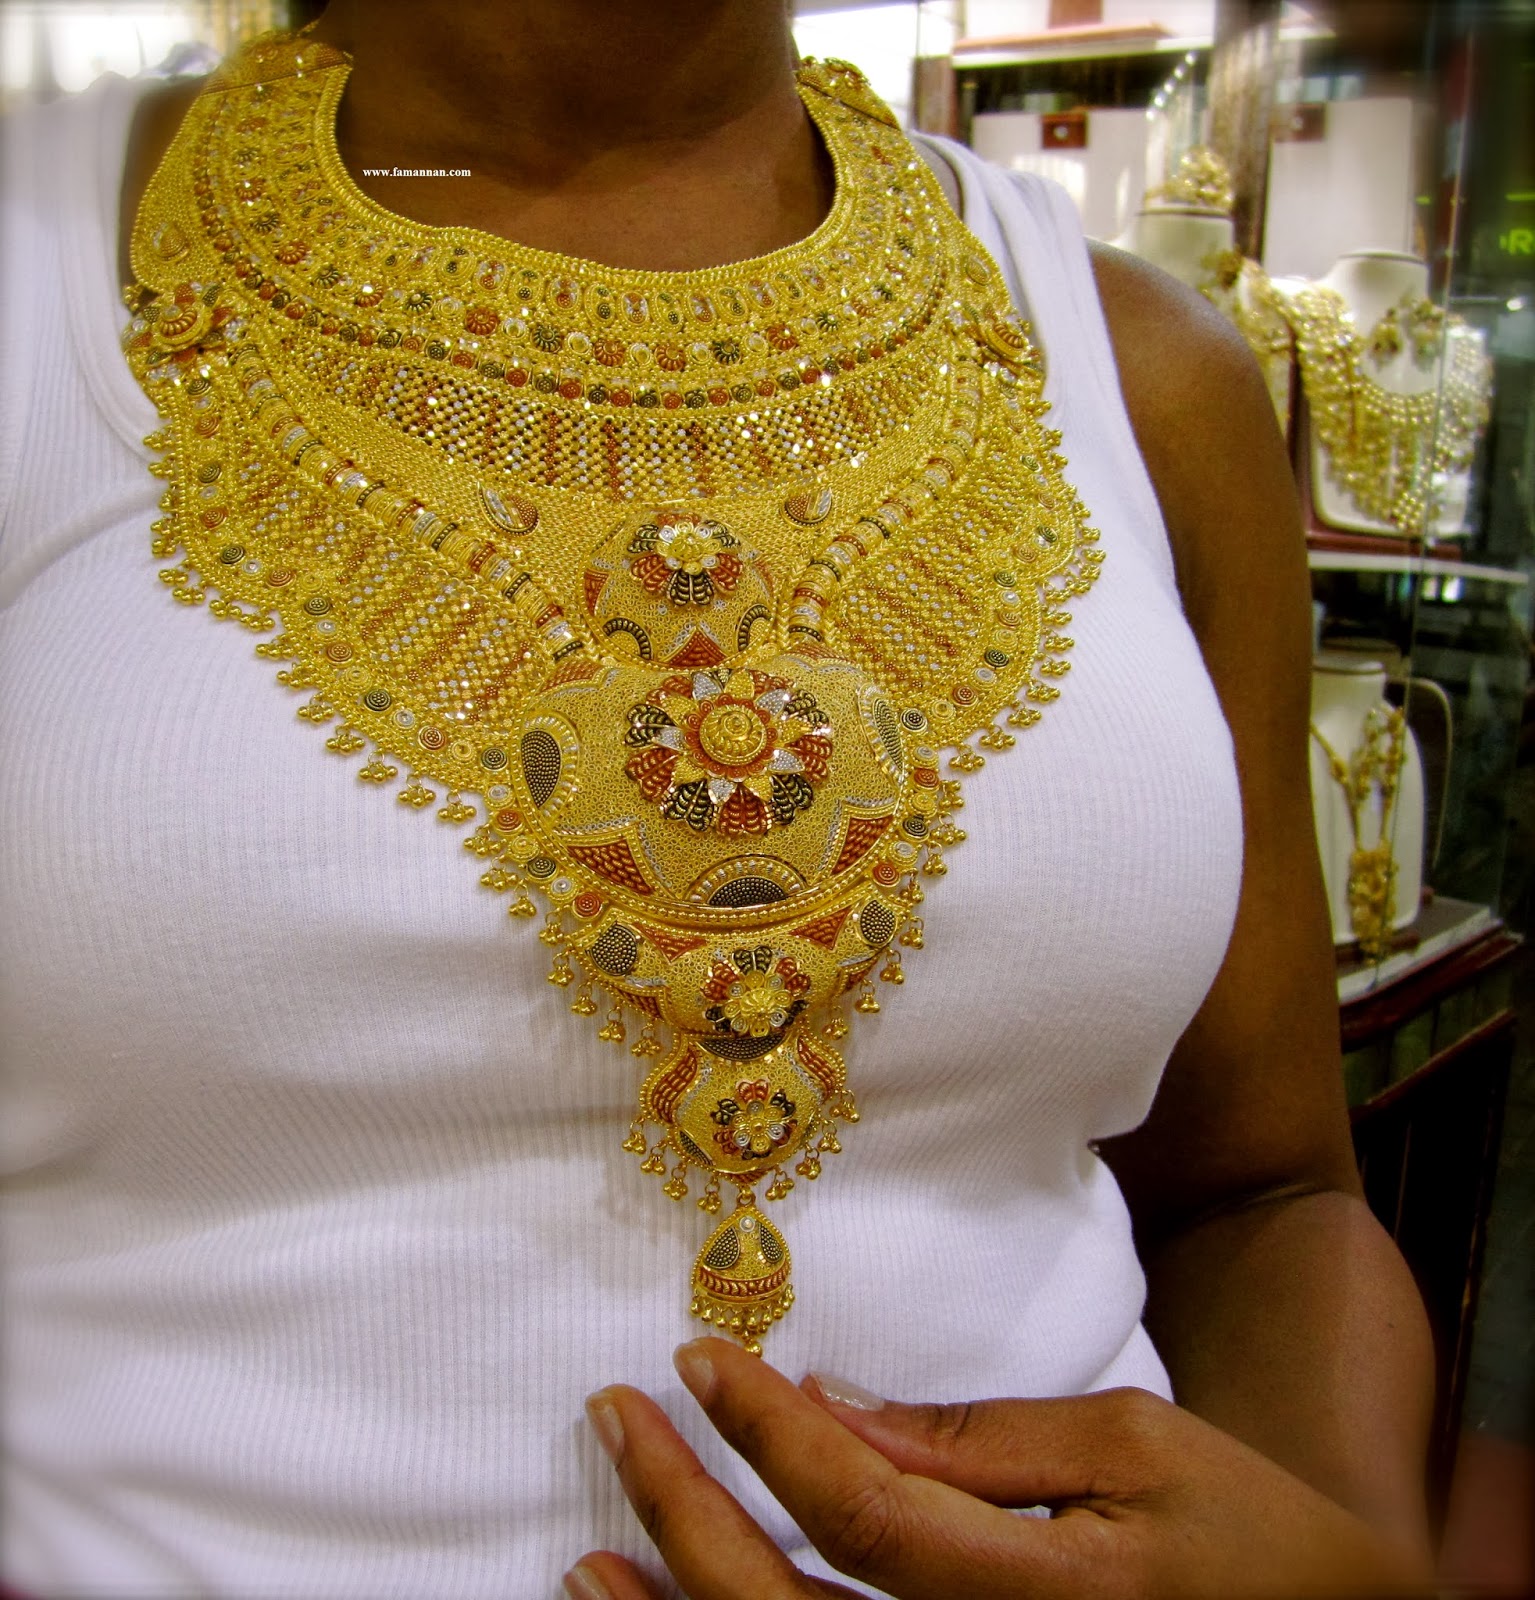 Fa+Mannan+Dubai+Fashion+Jewelry+stone-gold-jewelry-sets-and+bangles ...